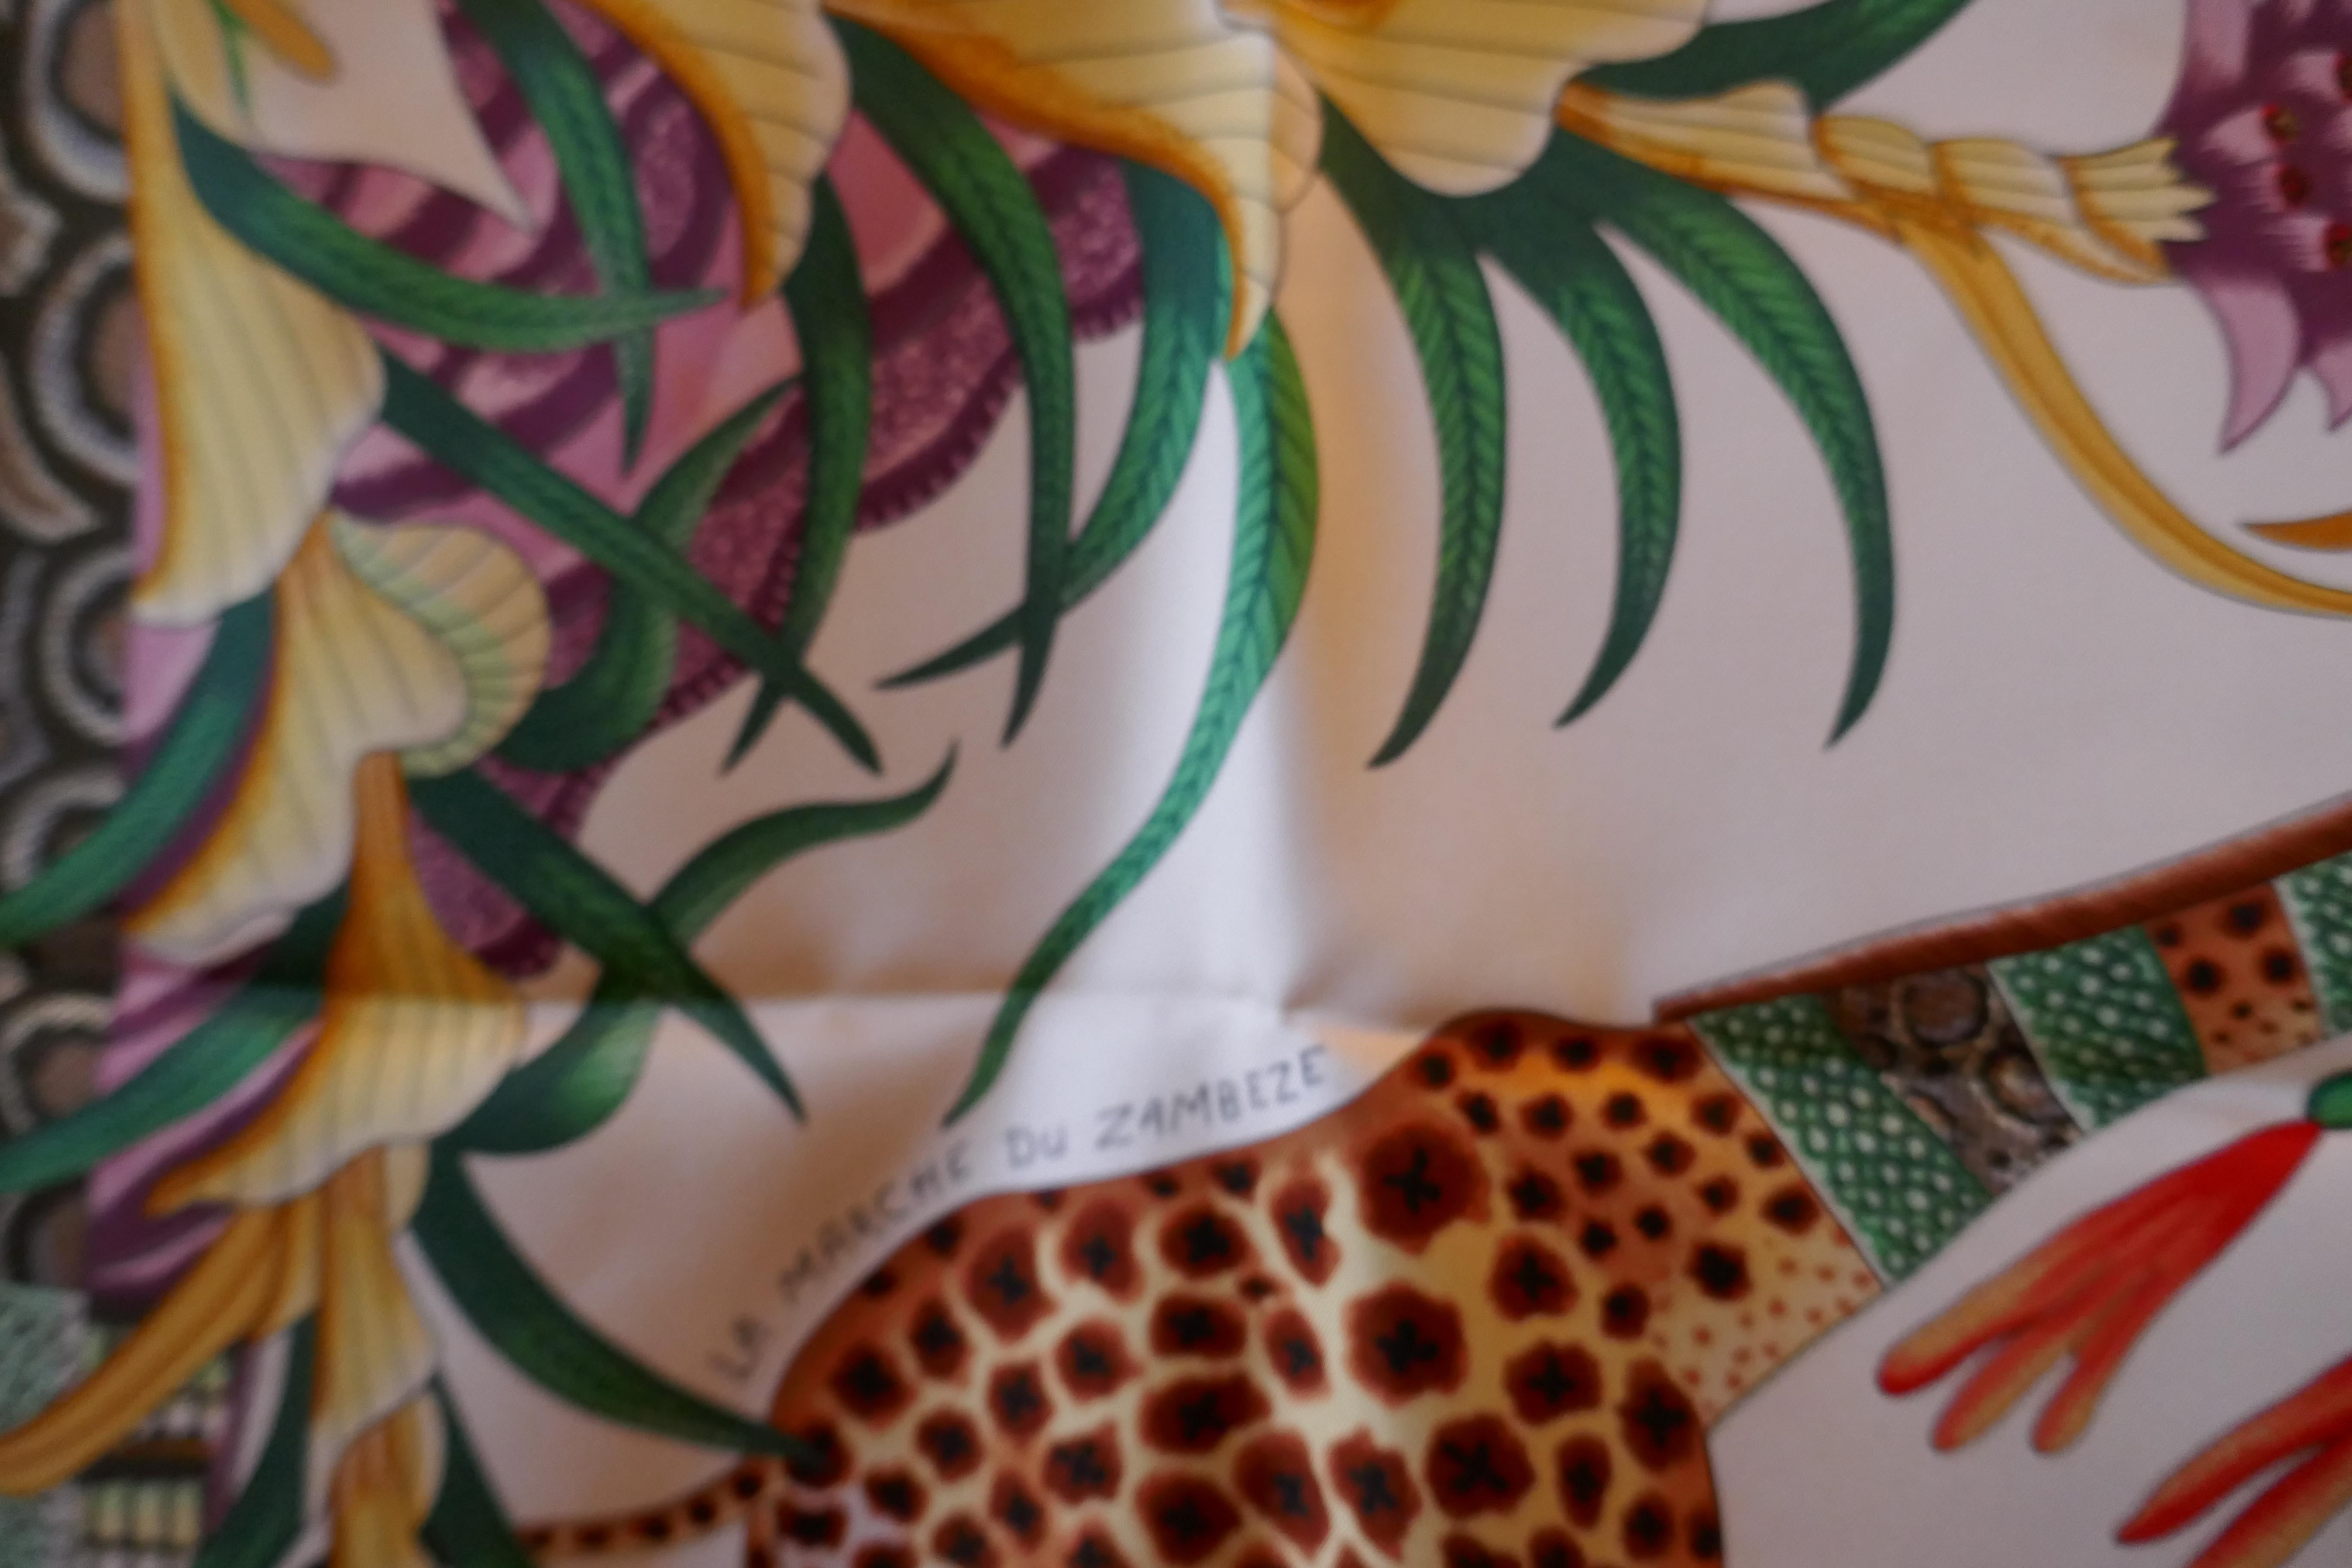 Gray HERMÈS Ardmore Artists design “La Marche du Zambeze” 100% Silk Scarf, 